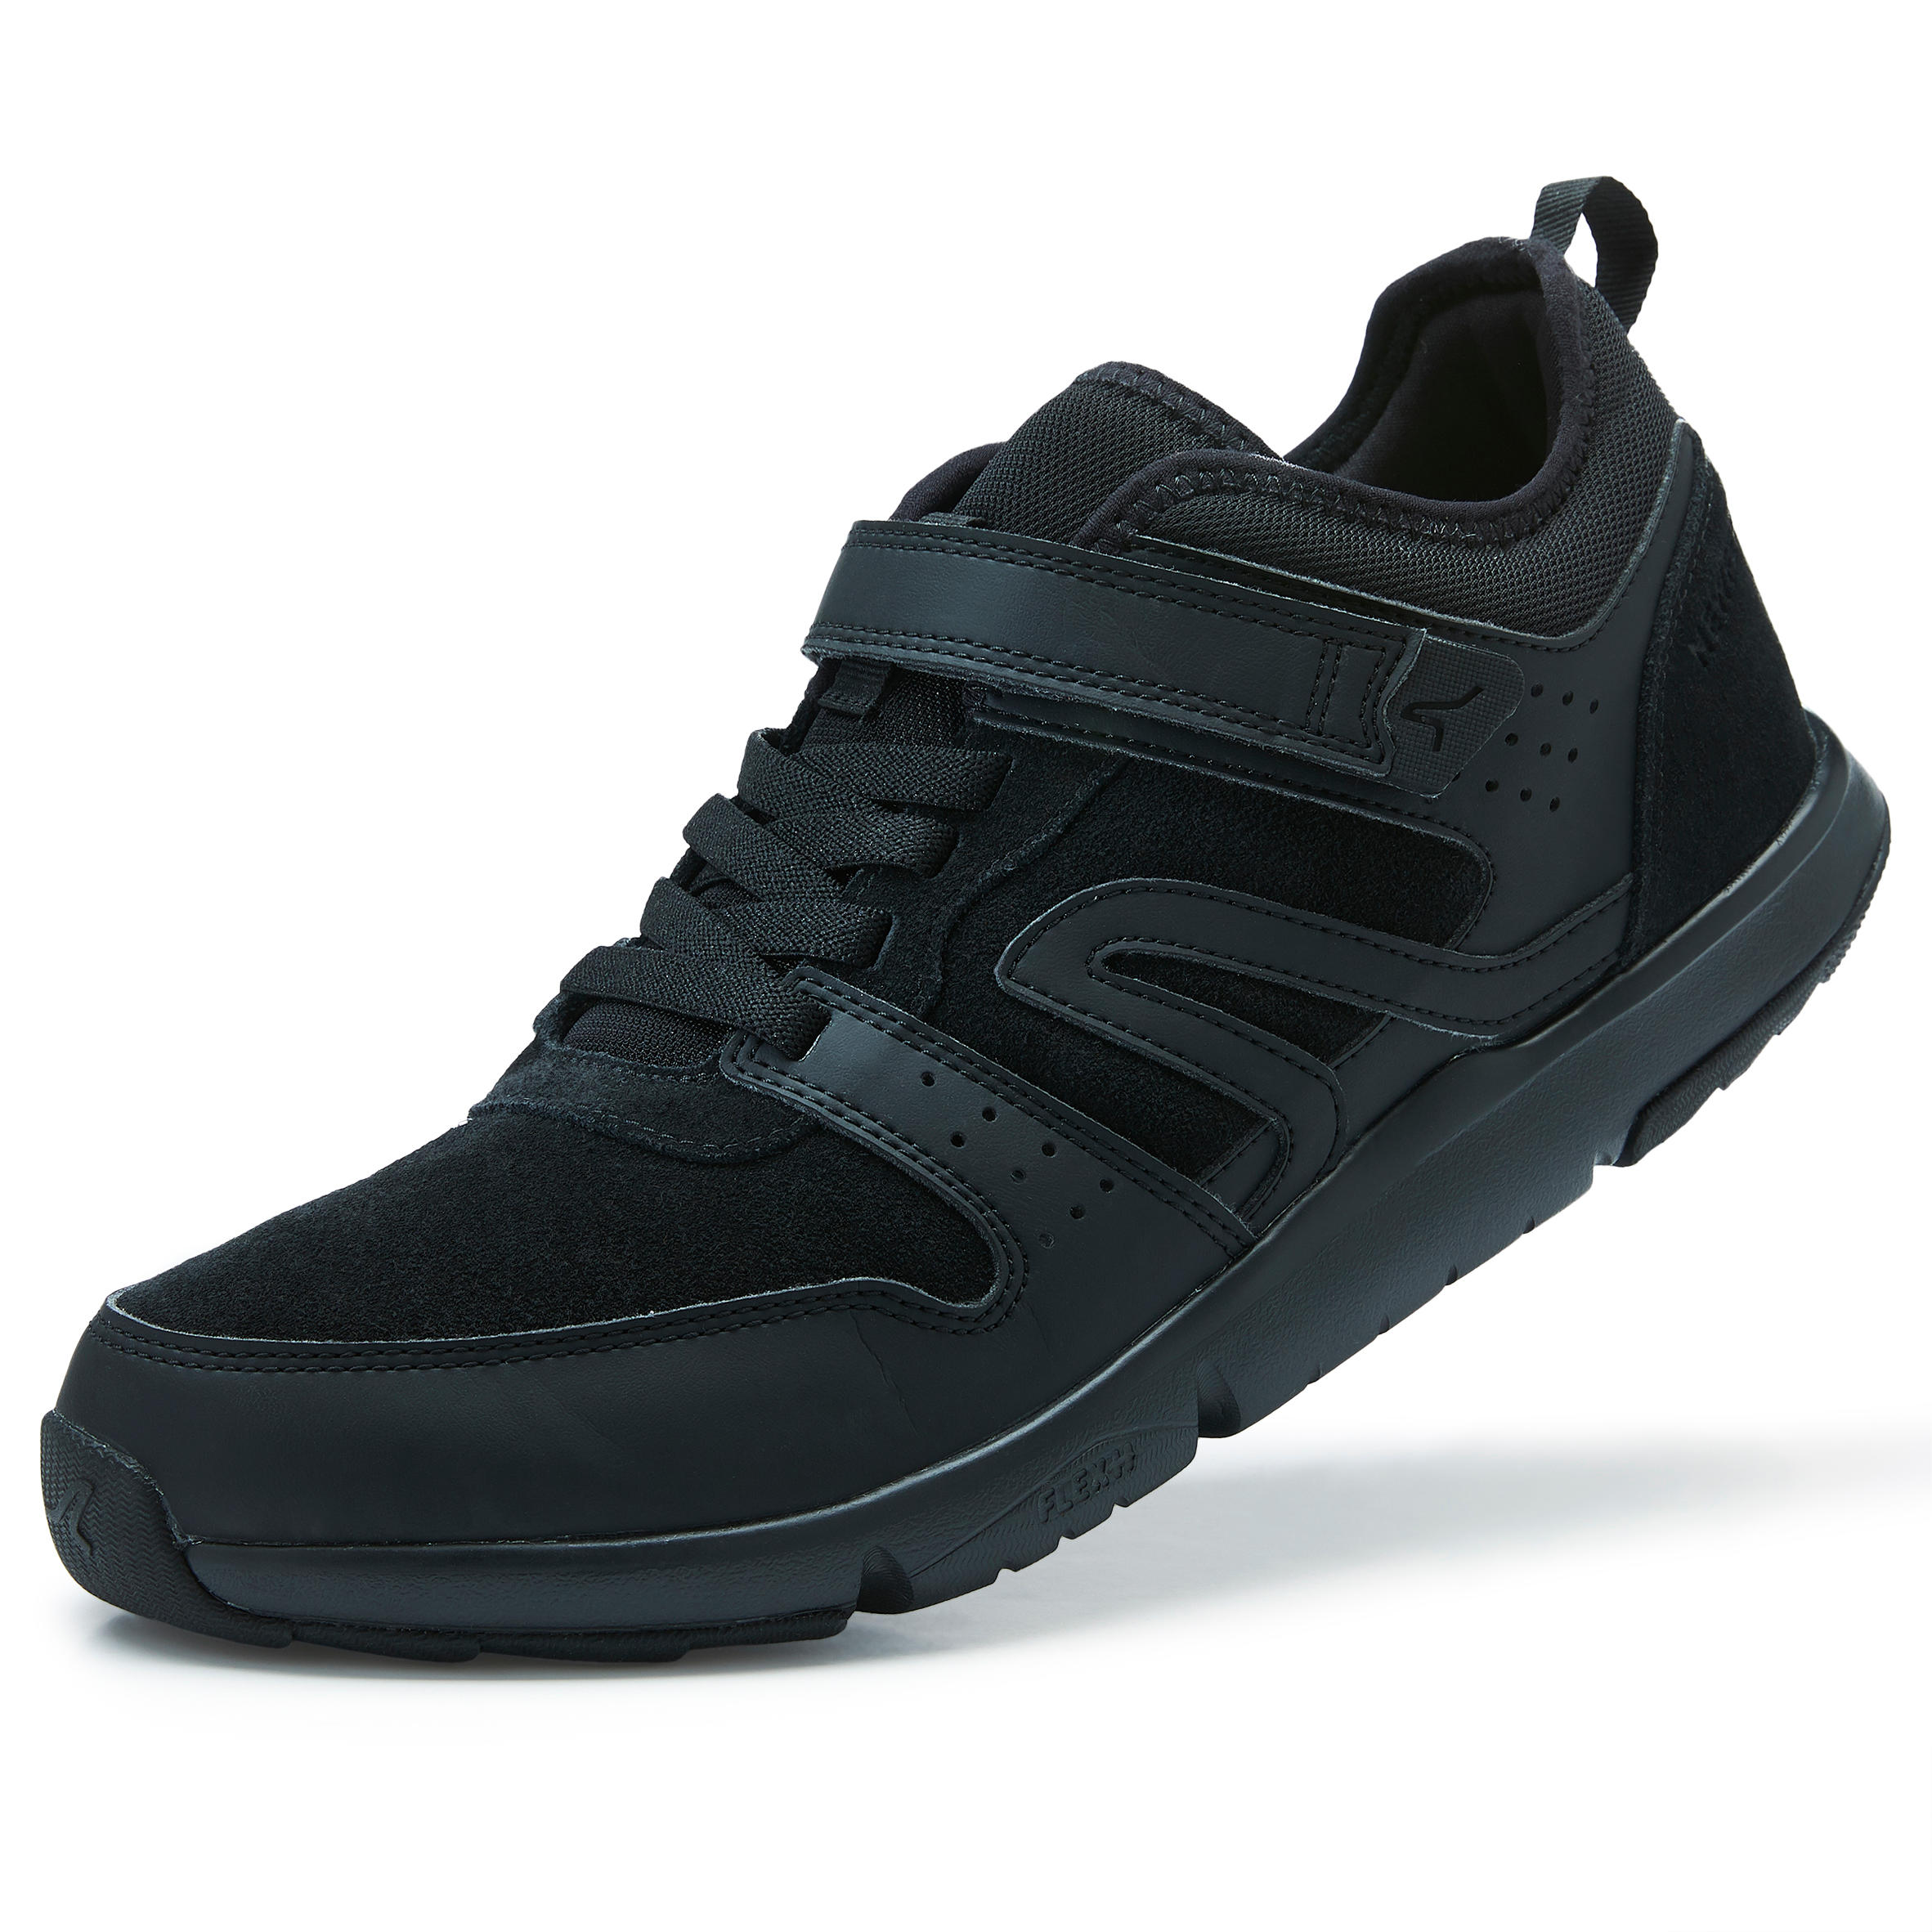 Actiwalk Easy Leather Men's Urban Walking Shoes - Black 12/14